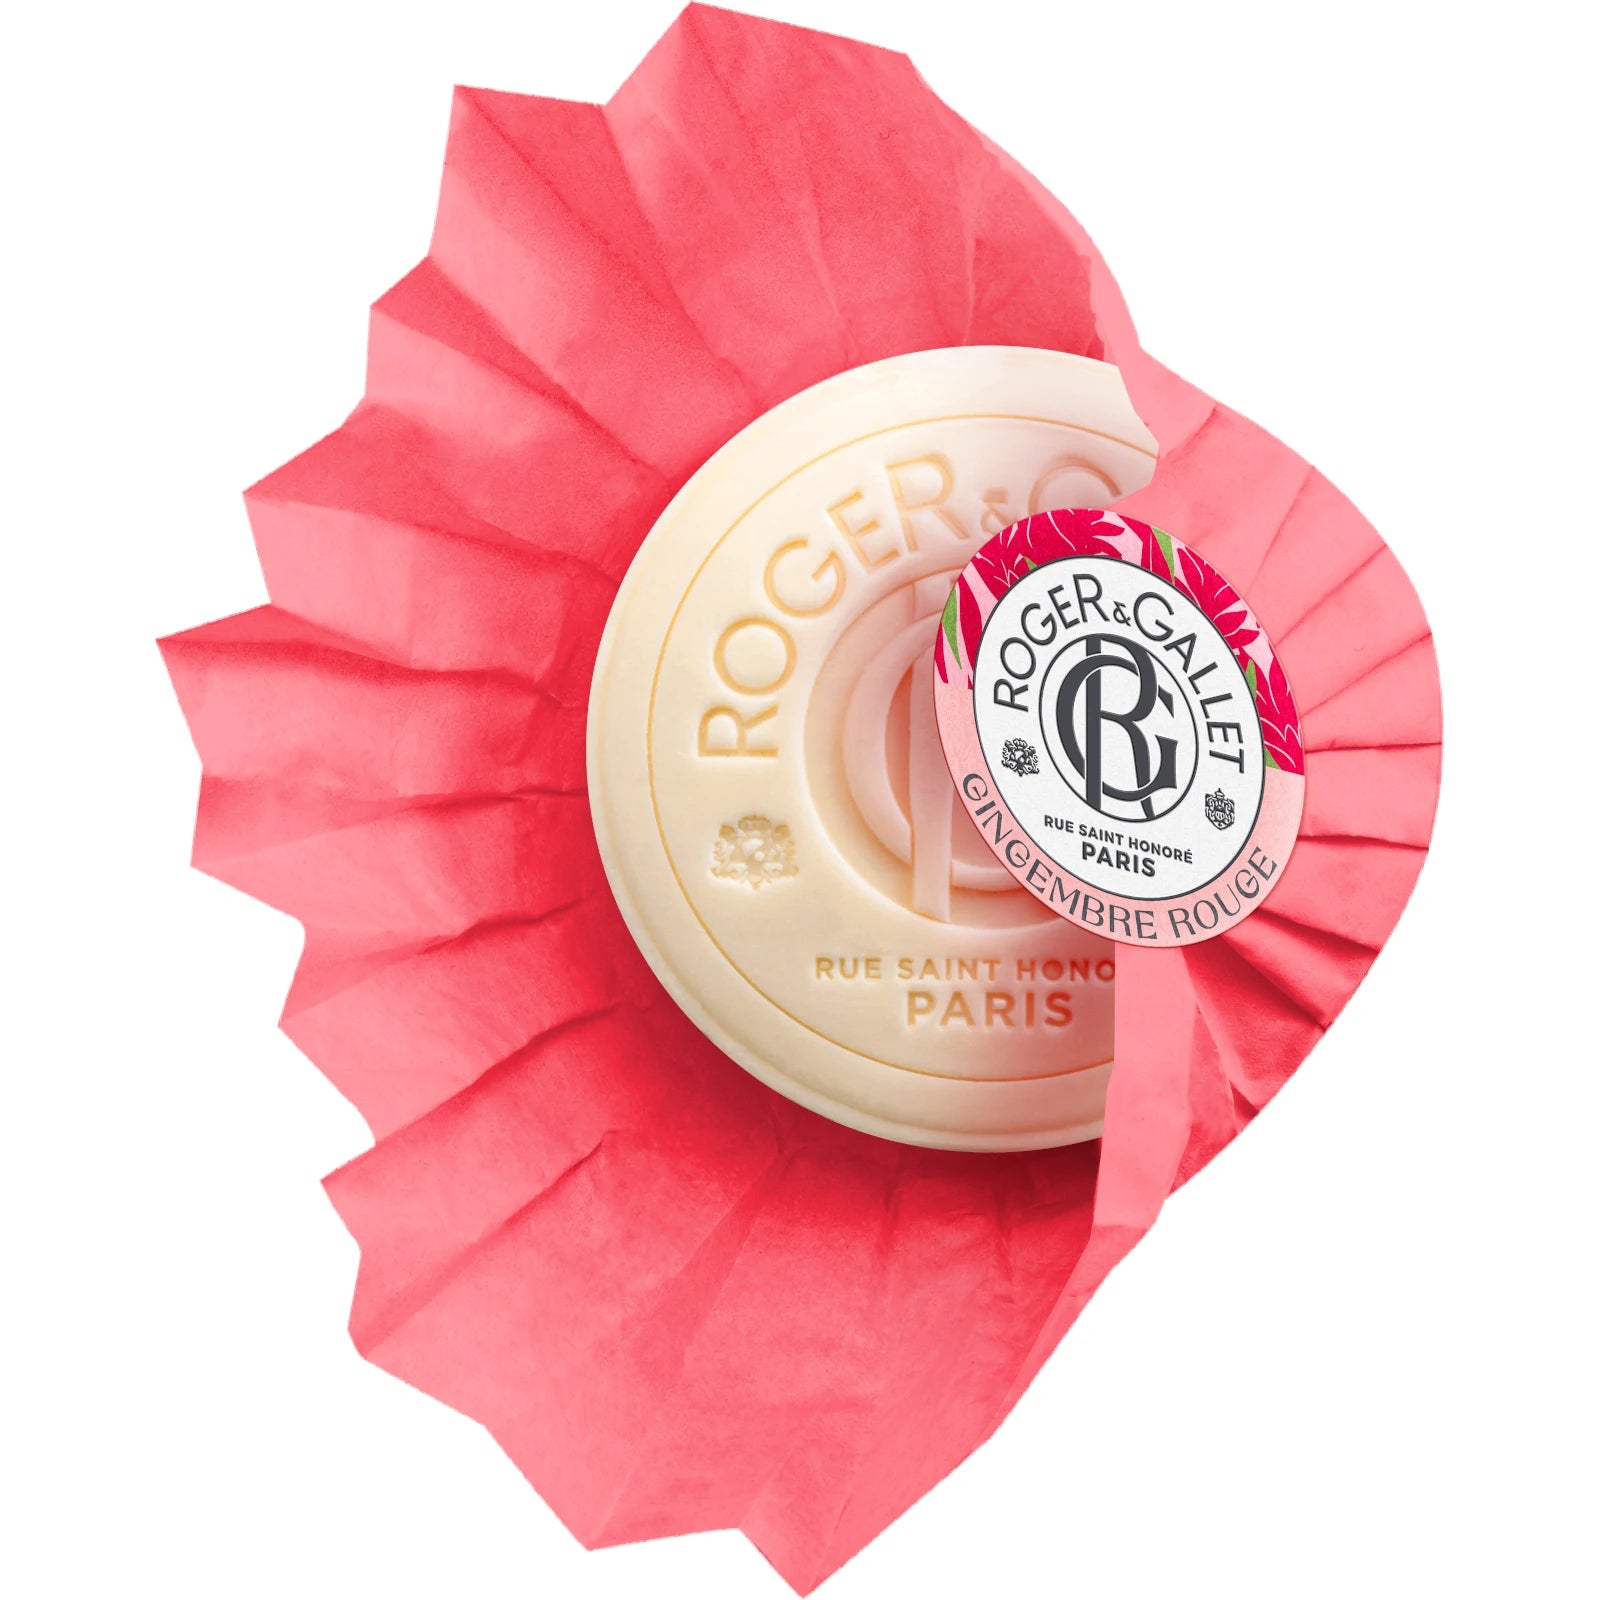 Roger & Gallet Perfumed Soap – Gingembre Rouge - 3.5oz